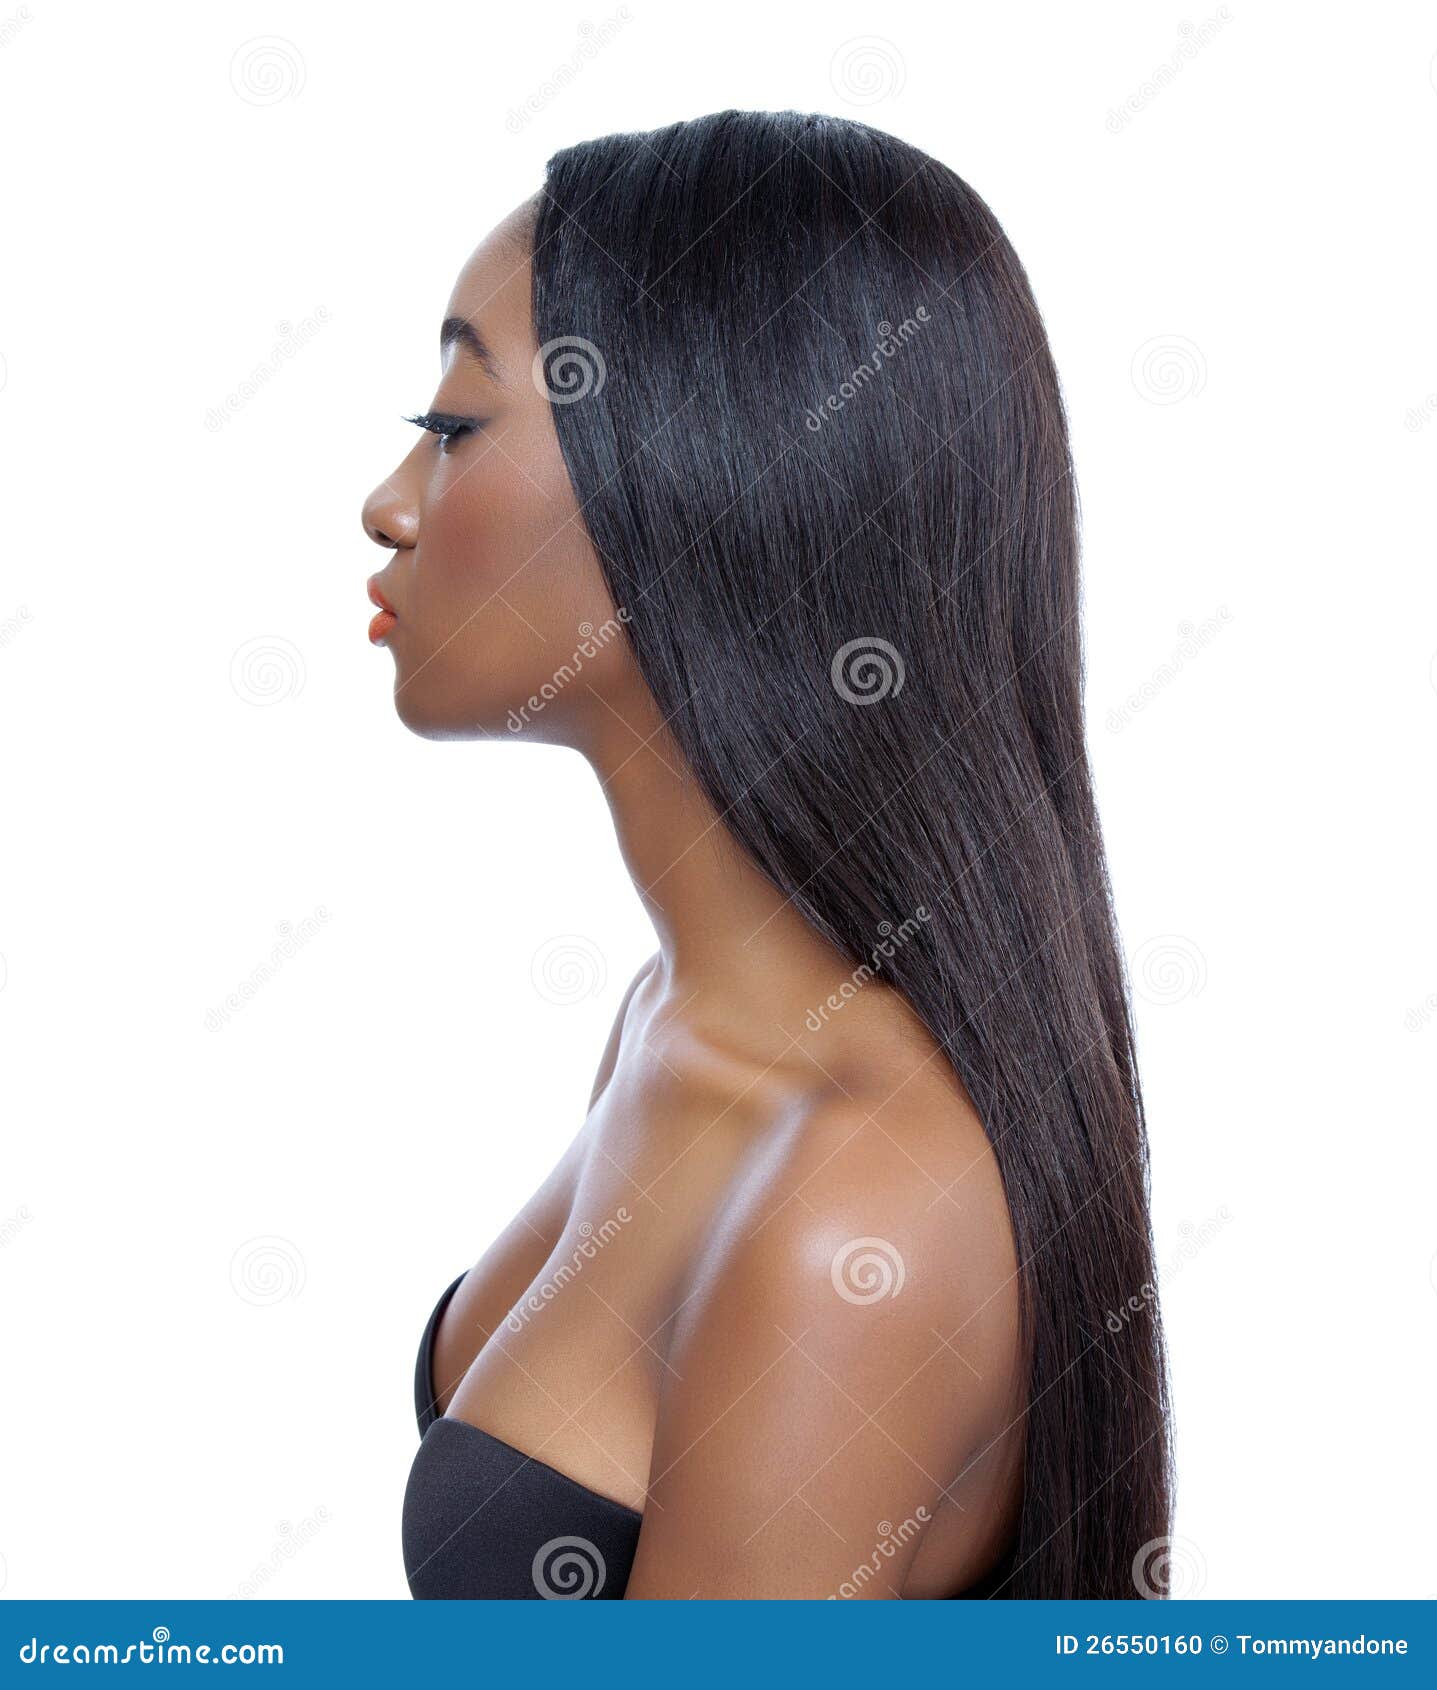 156 African American Hair Silky Woman Stock Photos - Free